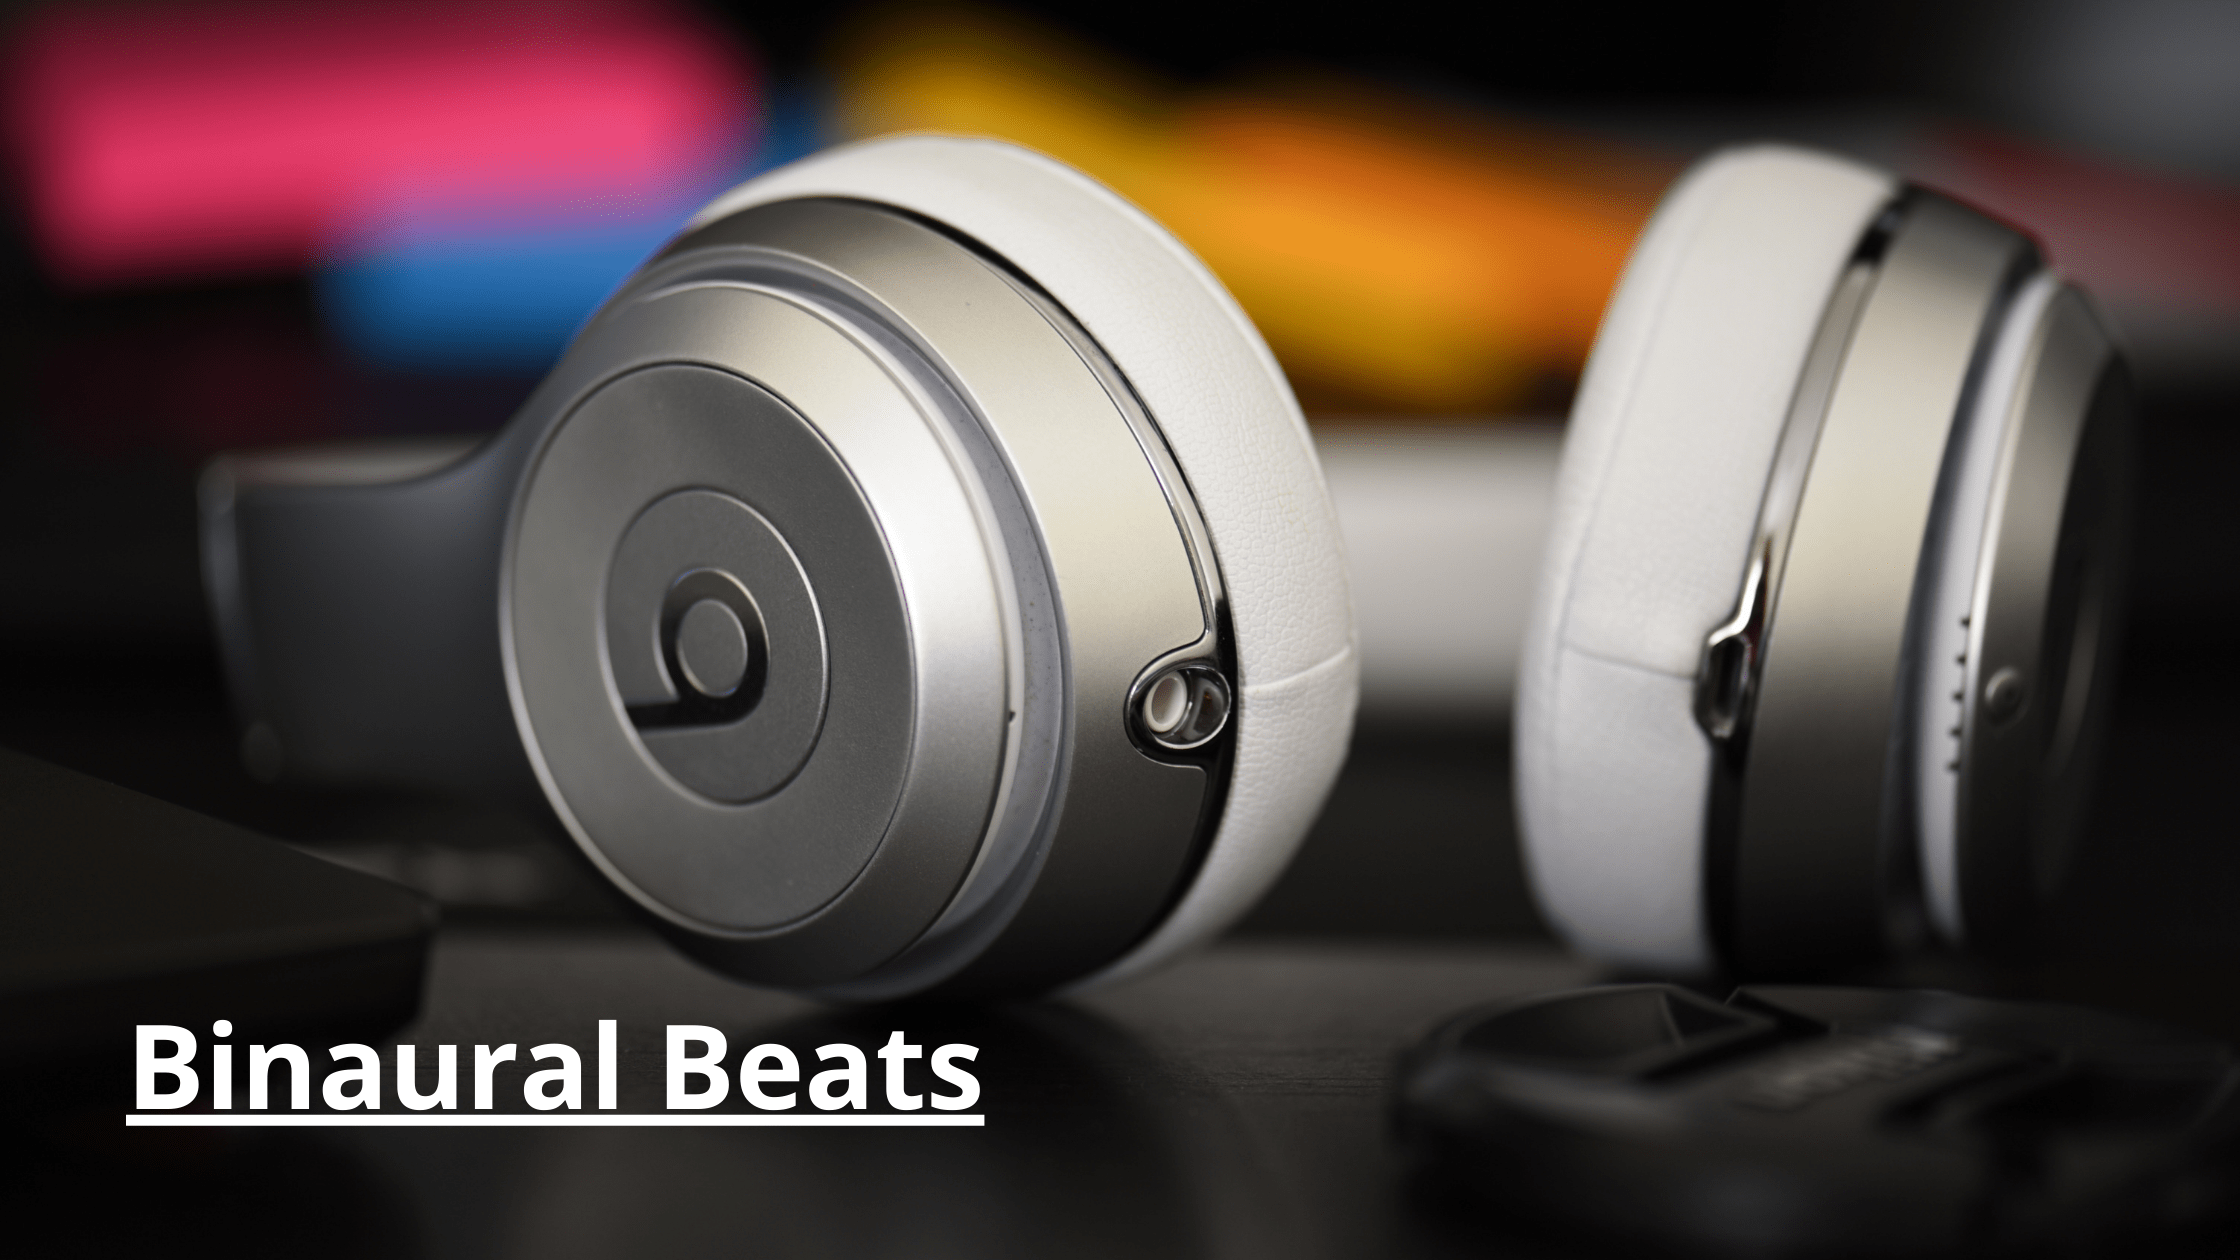 10 Backed benefits of Binaural Beats